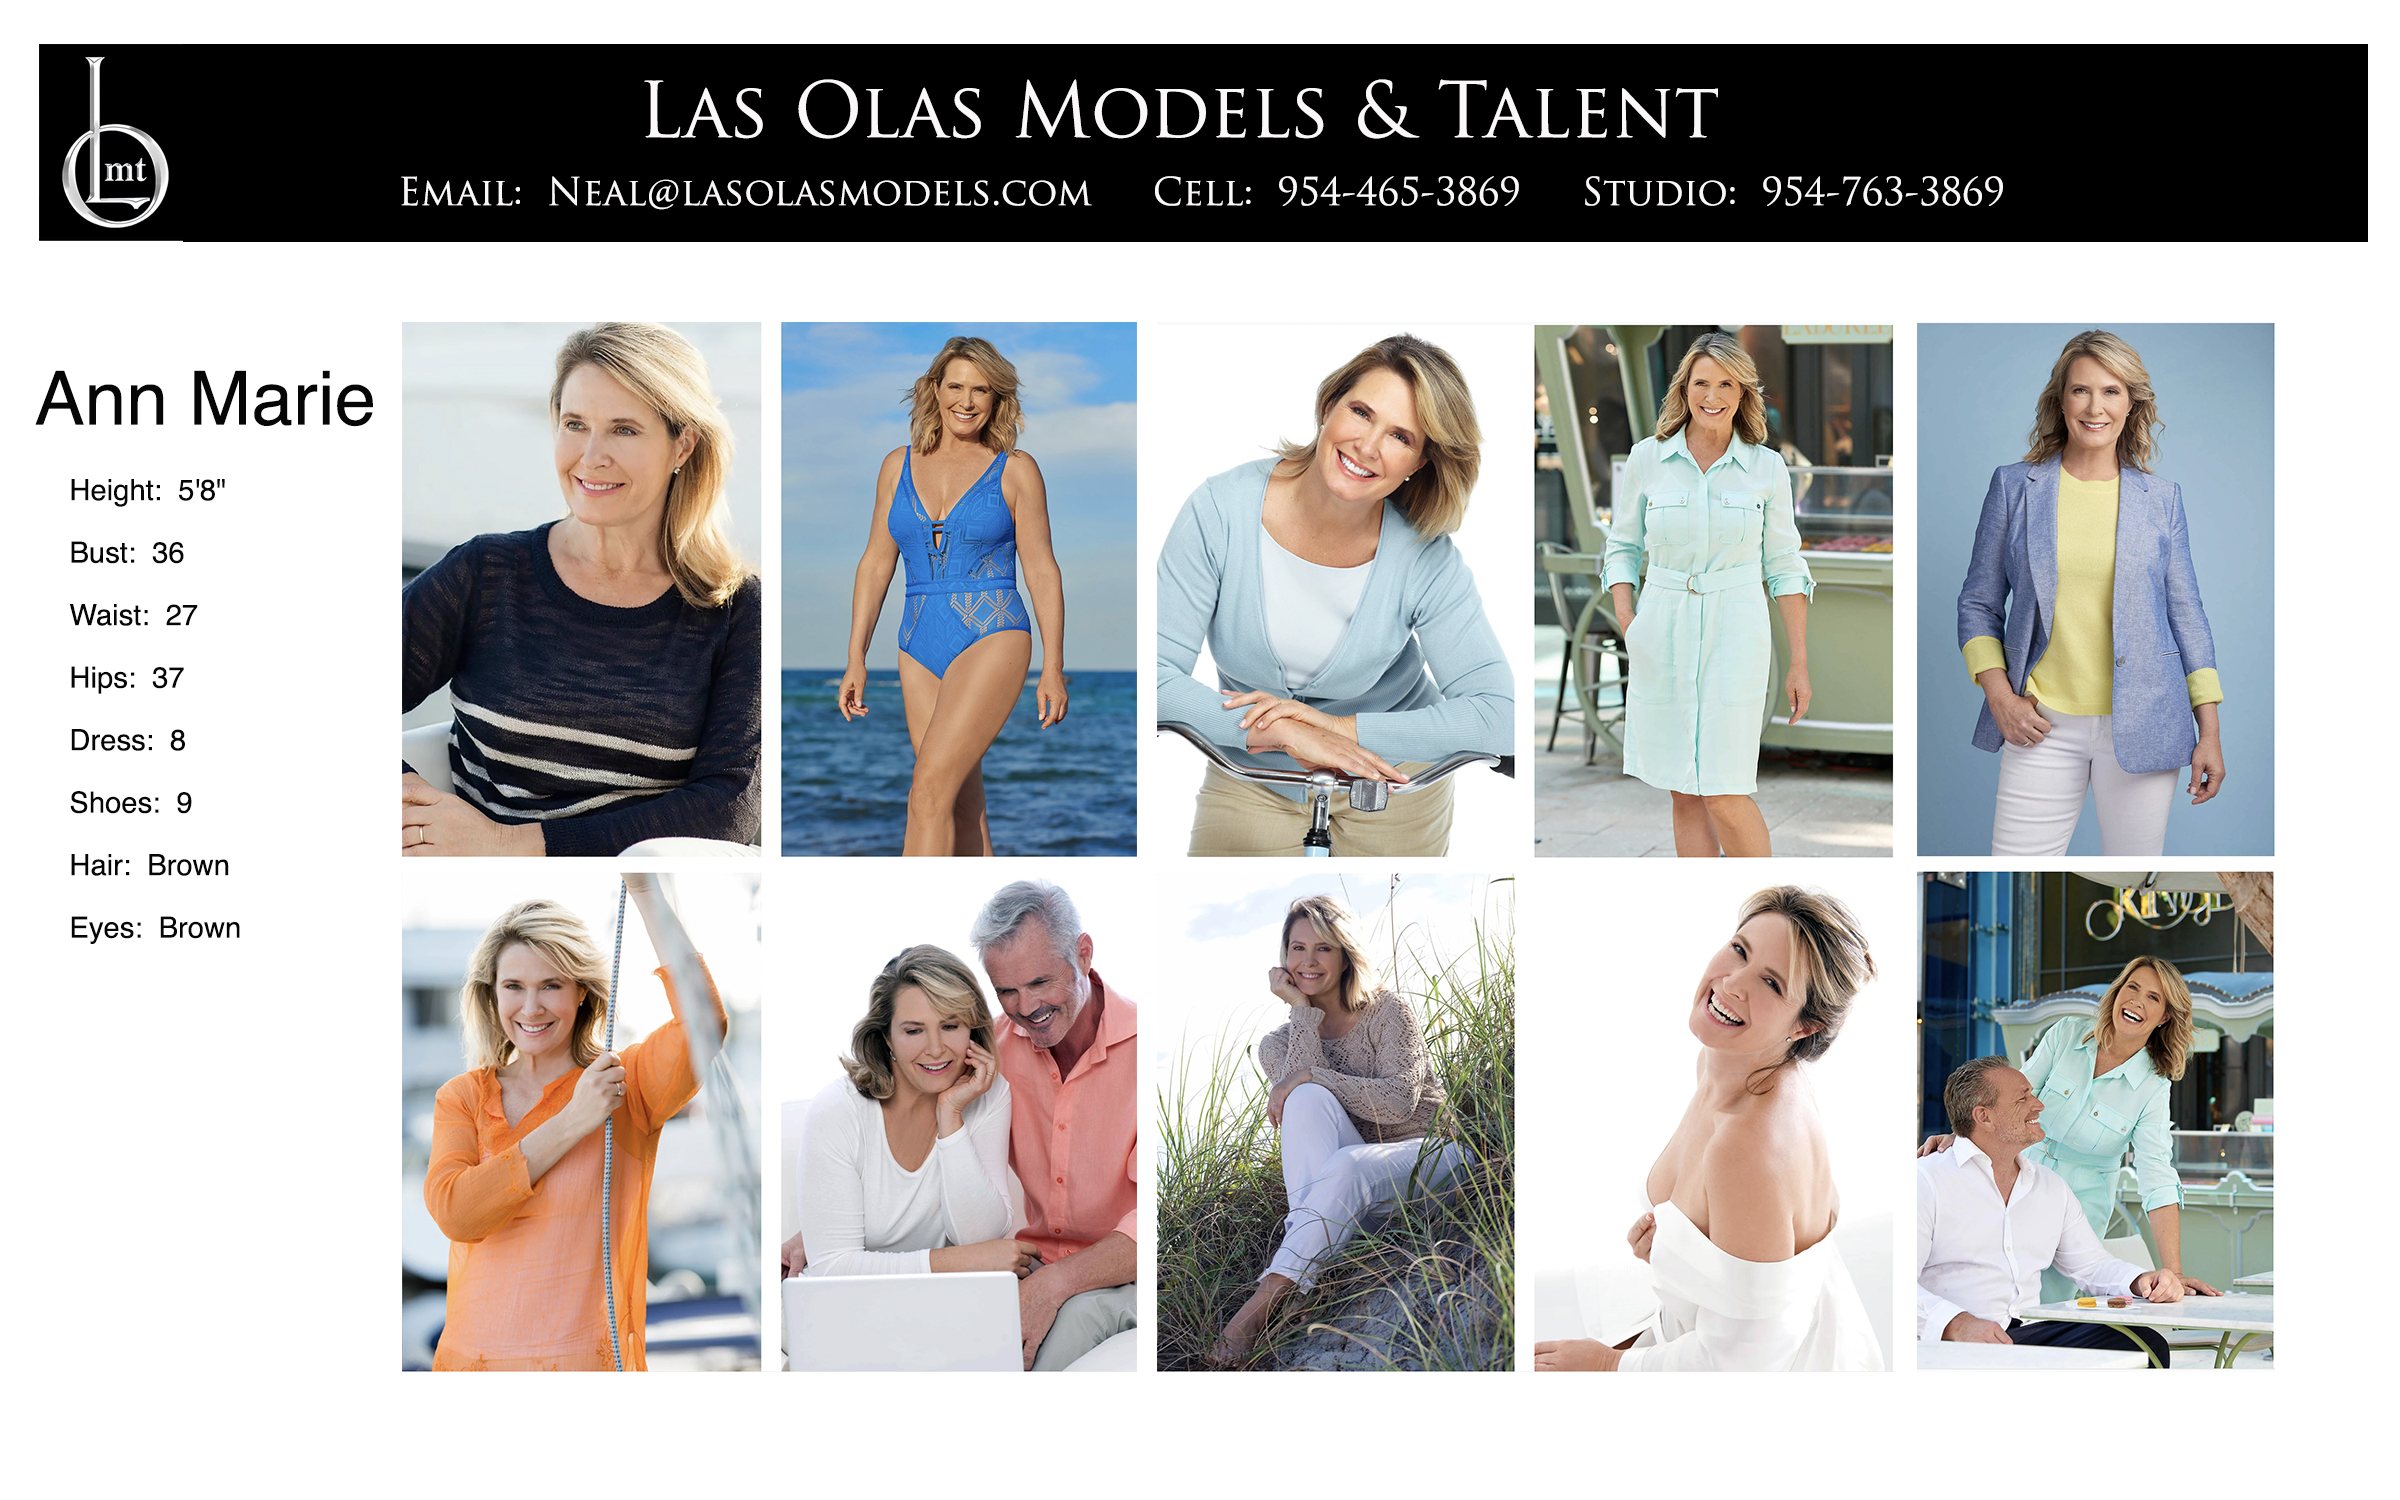 Female Model - Ann Marie  - Fort Lauderdale - Miami - South Florida - Palm Beach - Las Olas Models and Talent Ft. Lauderdale - Ann Marie Comp